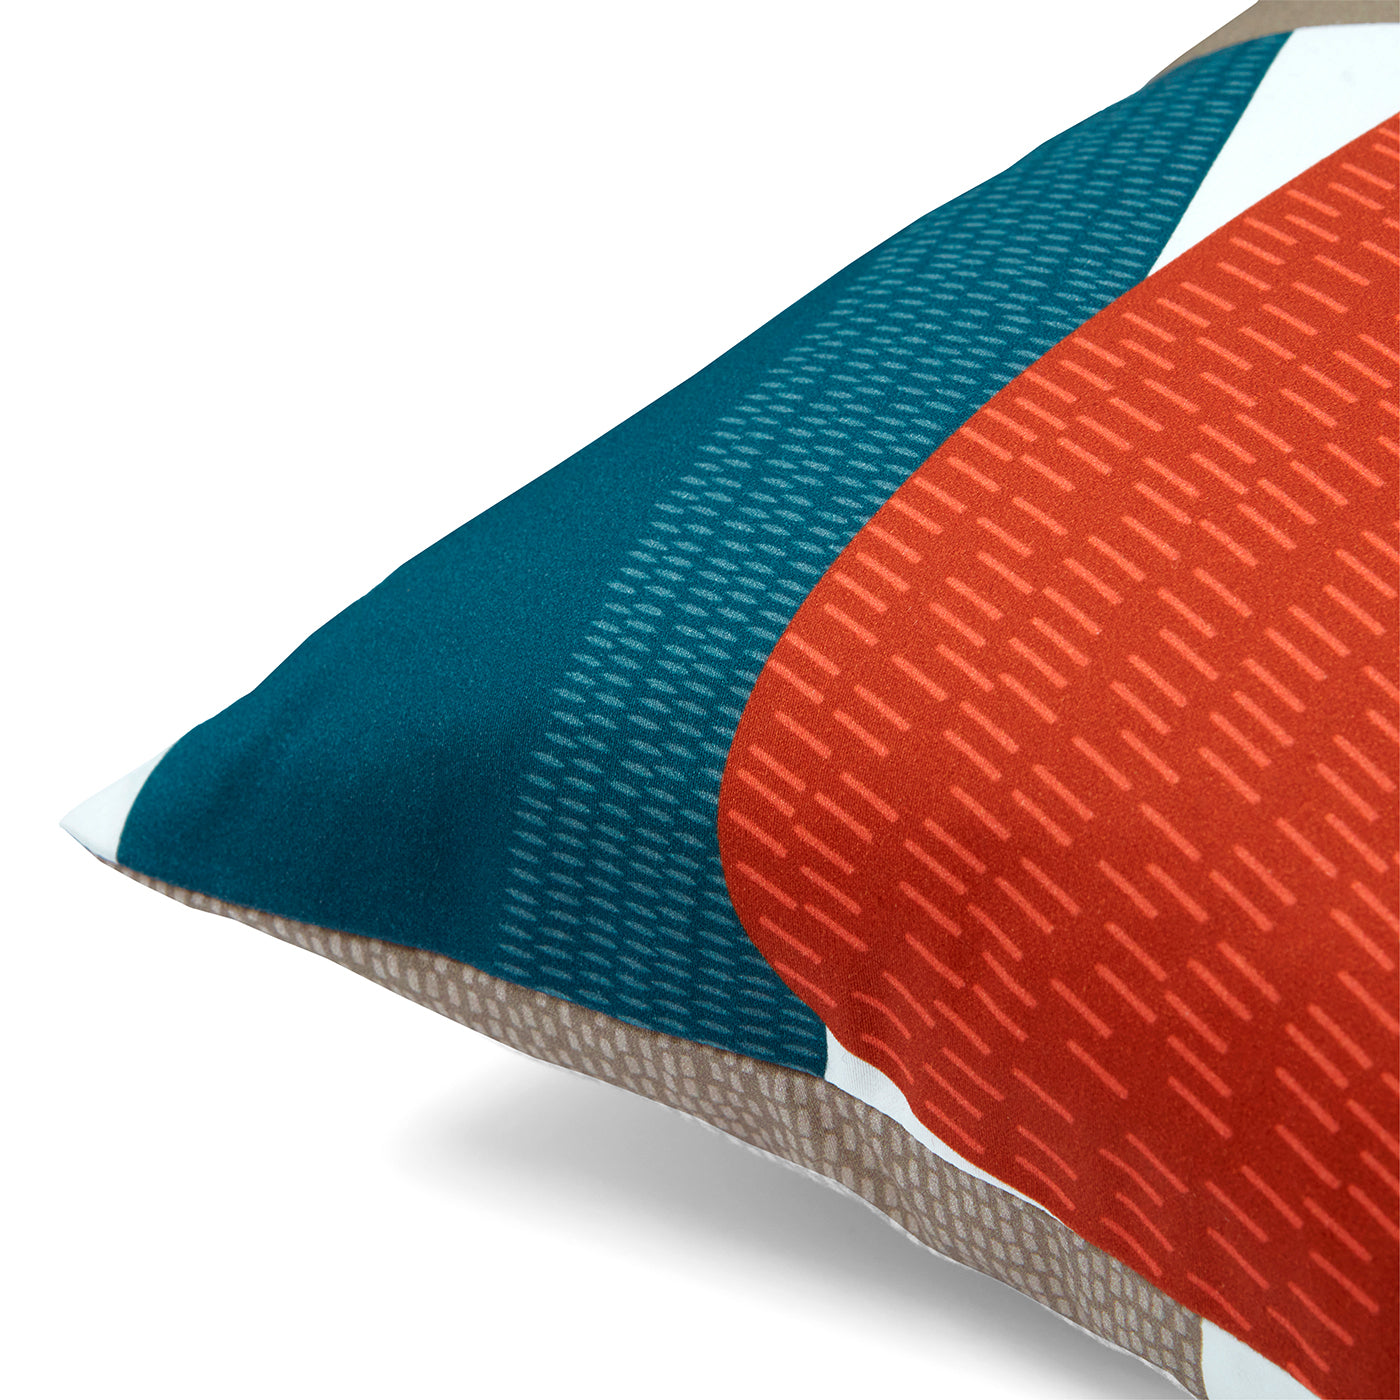 Sonia Set of 2 Rectangular Polychrome Cushions #5 - Alternative view 1